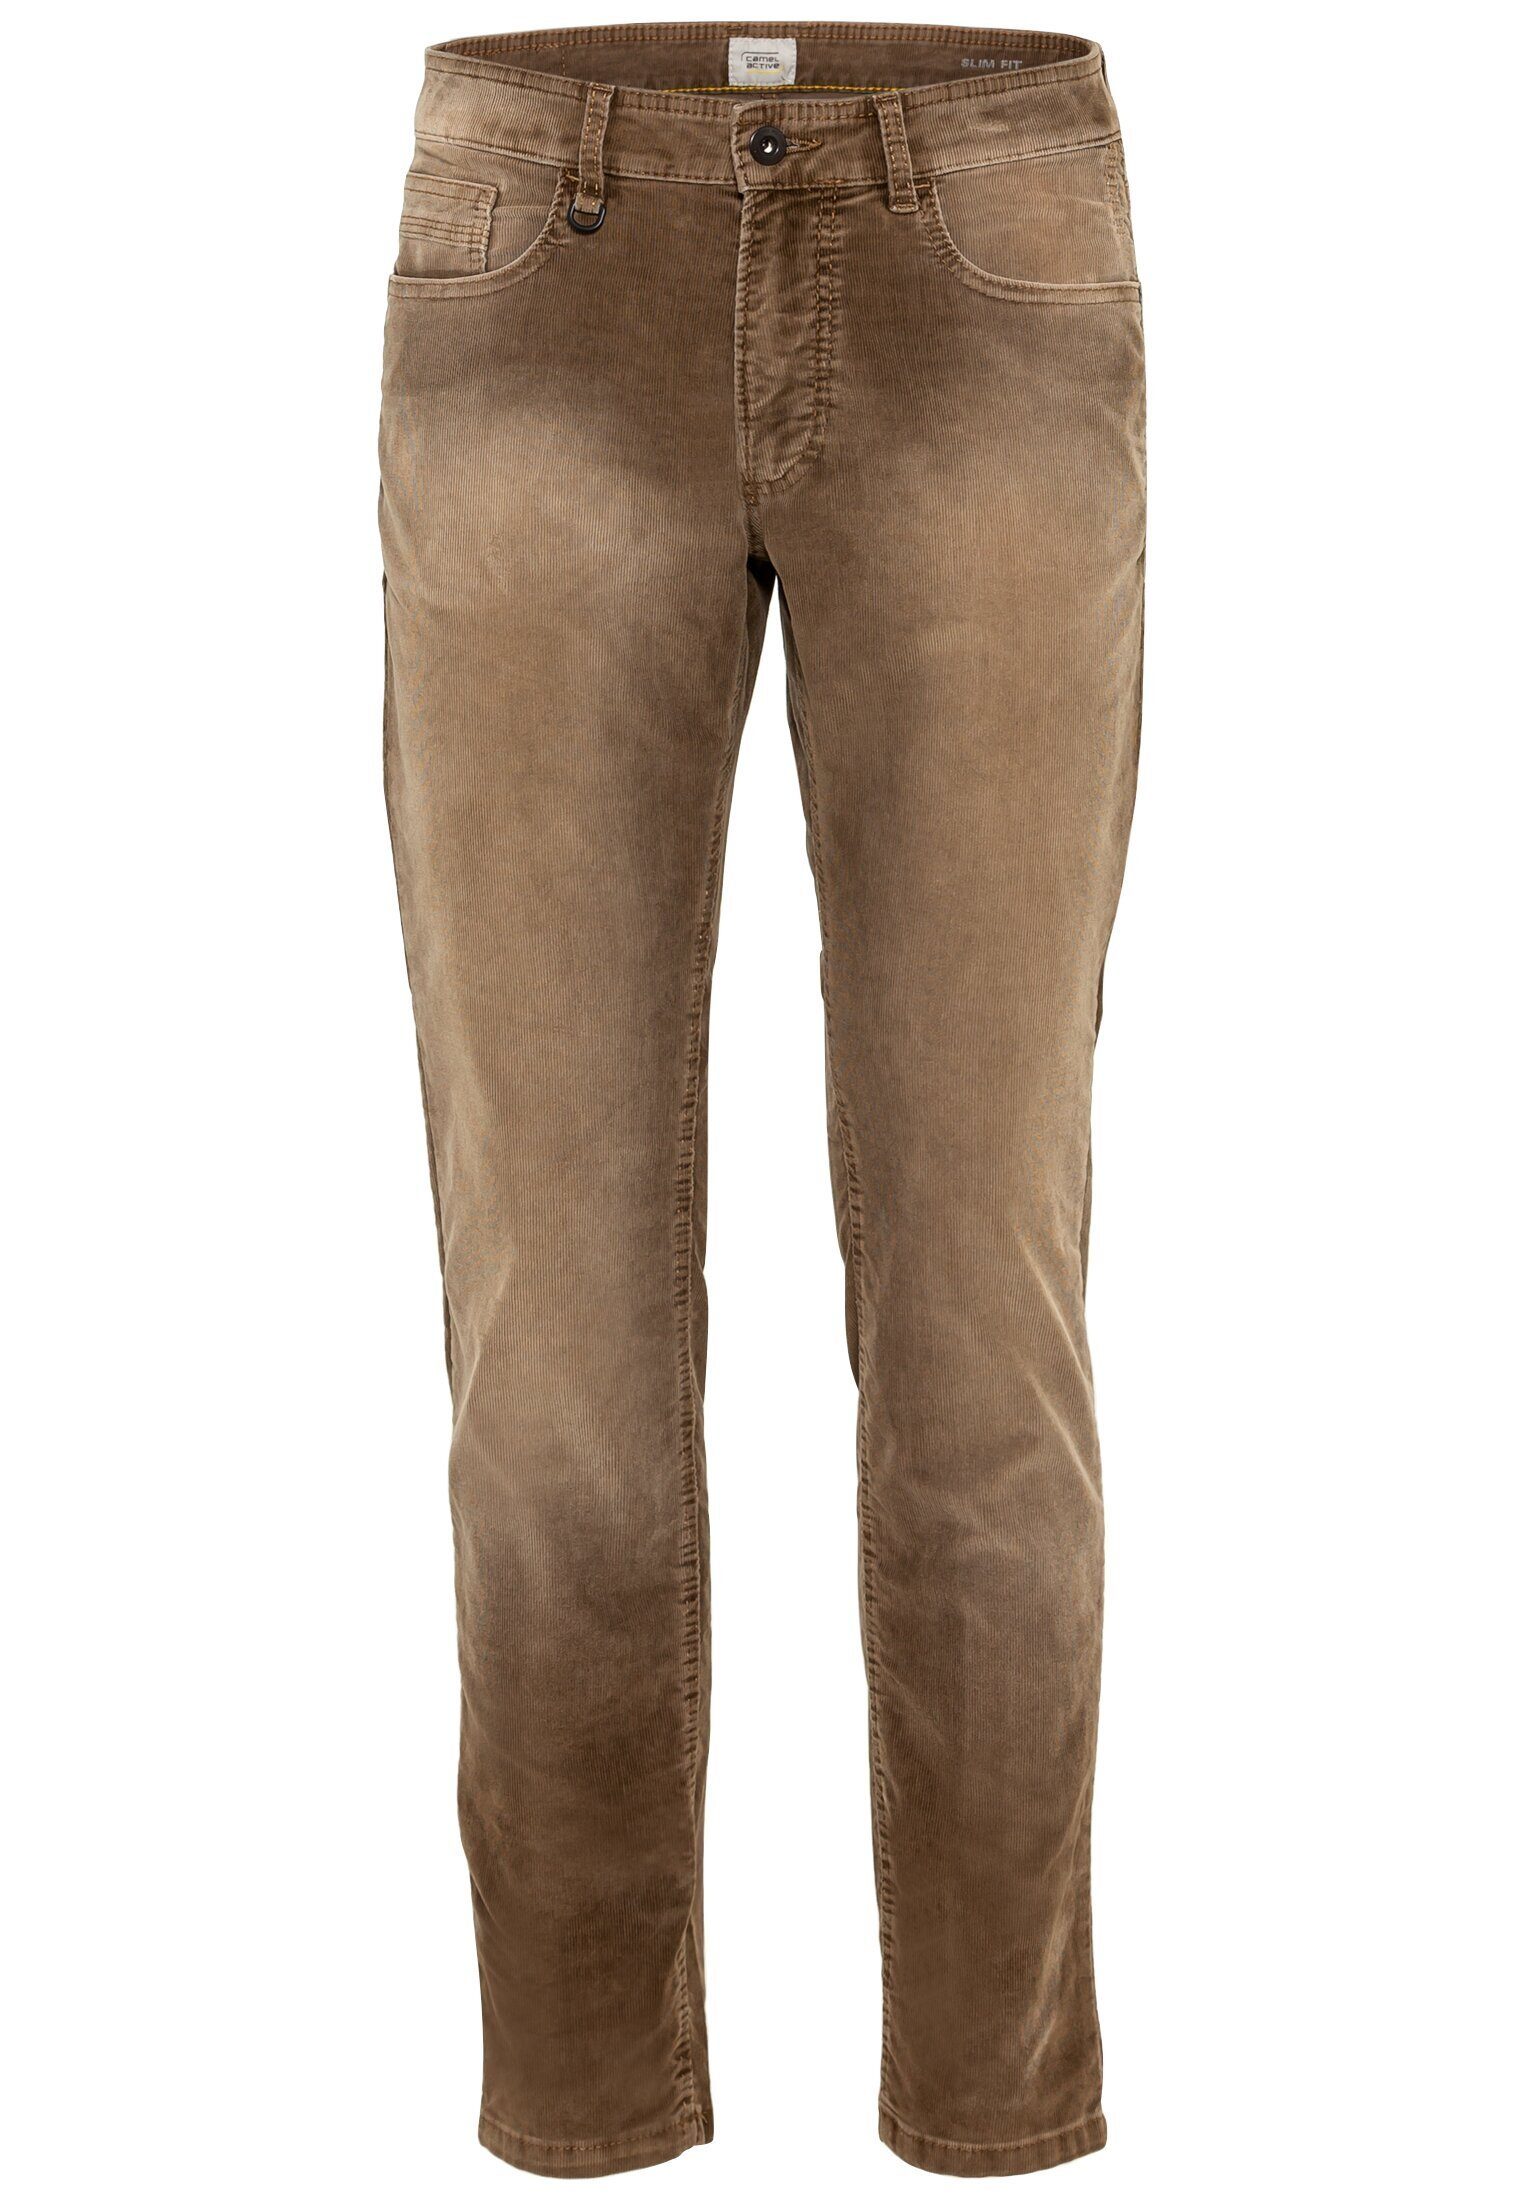 Braun 5-Pocket-Jeans active Fit Cordhose camel Slim